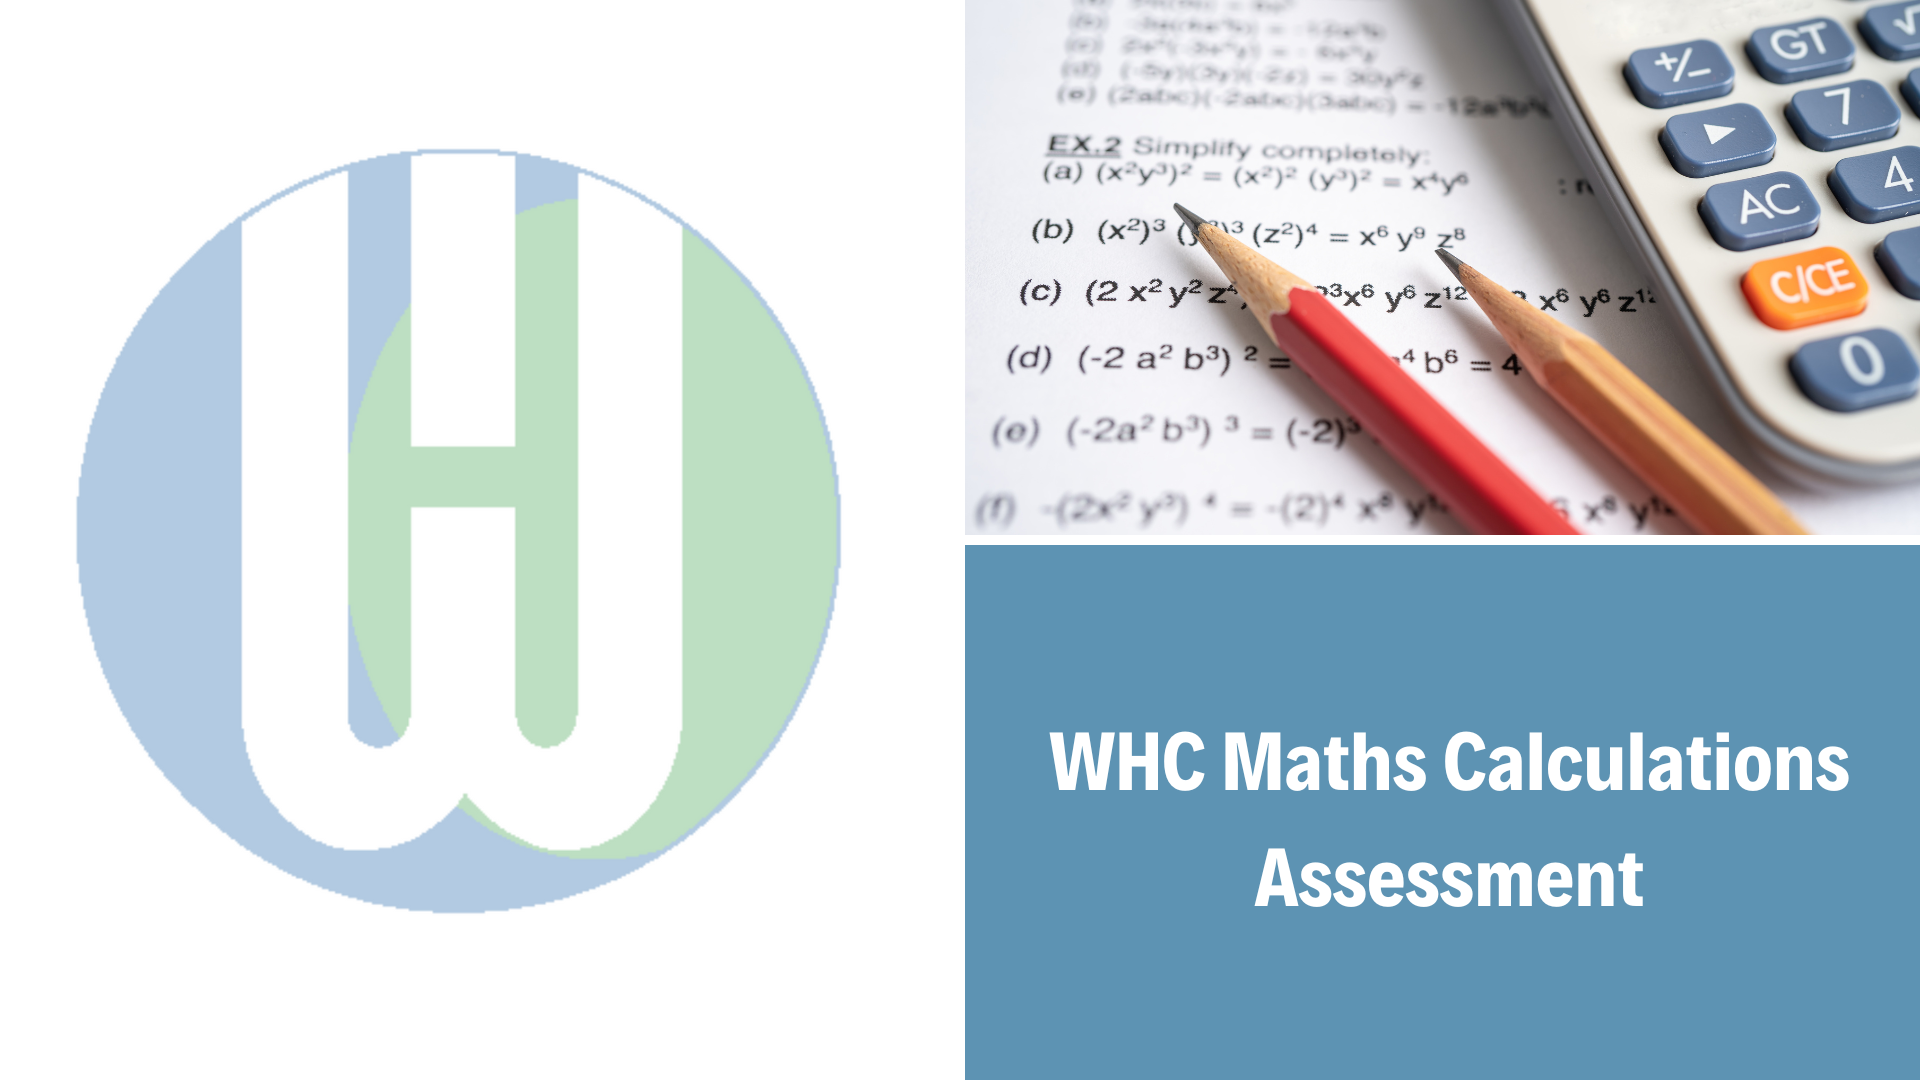 WHC Maths Calculations Assessment